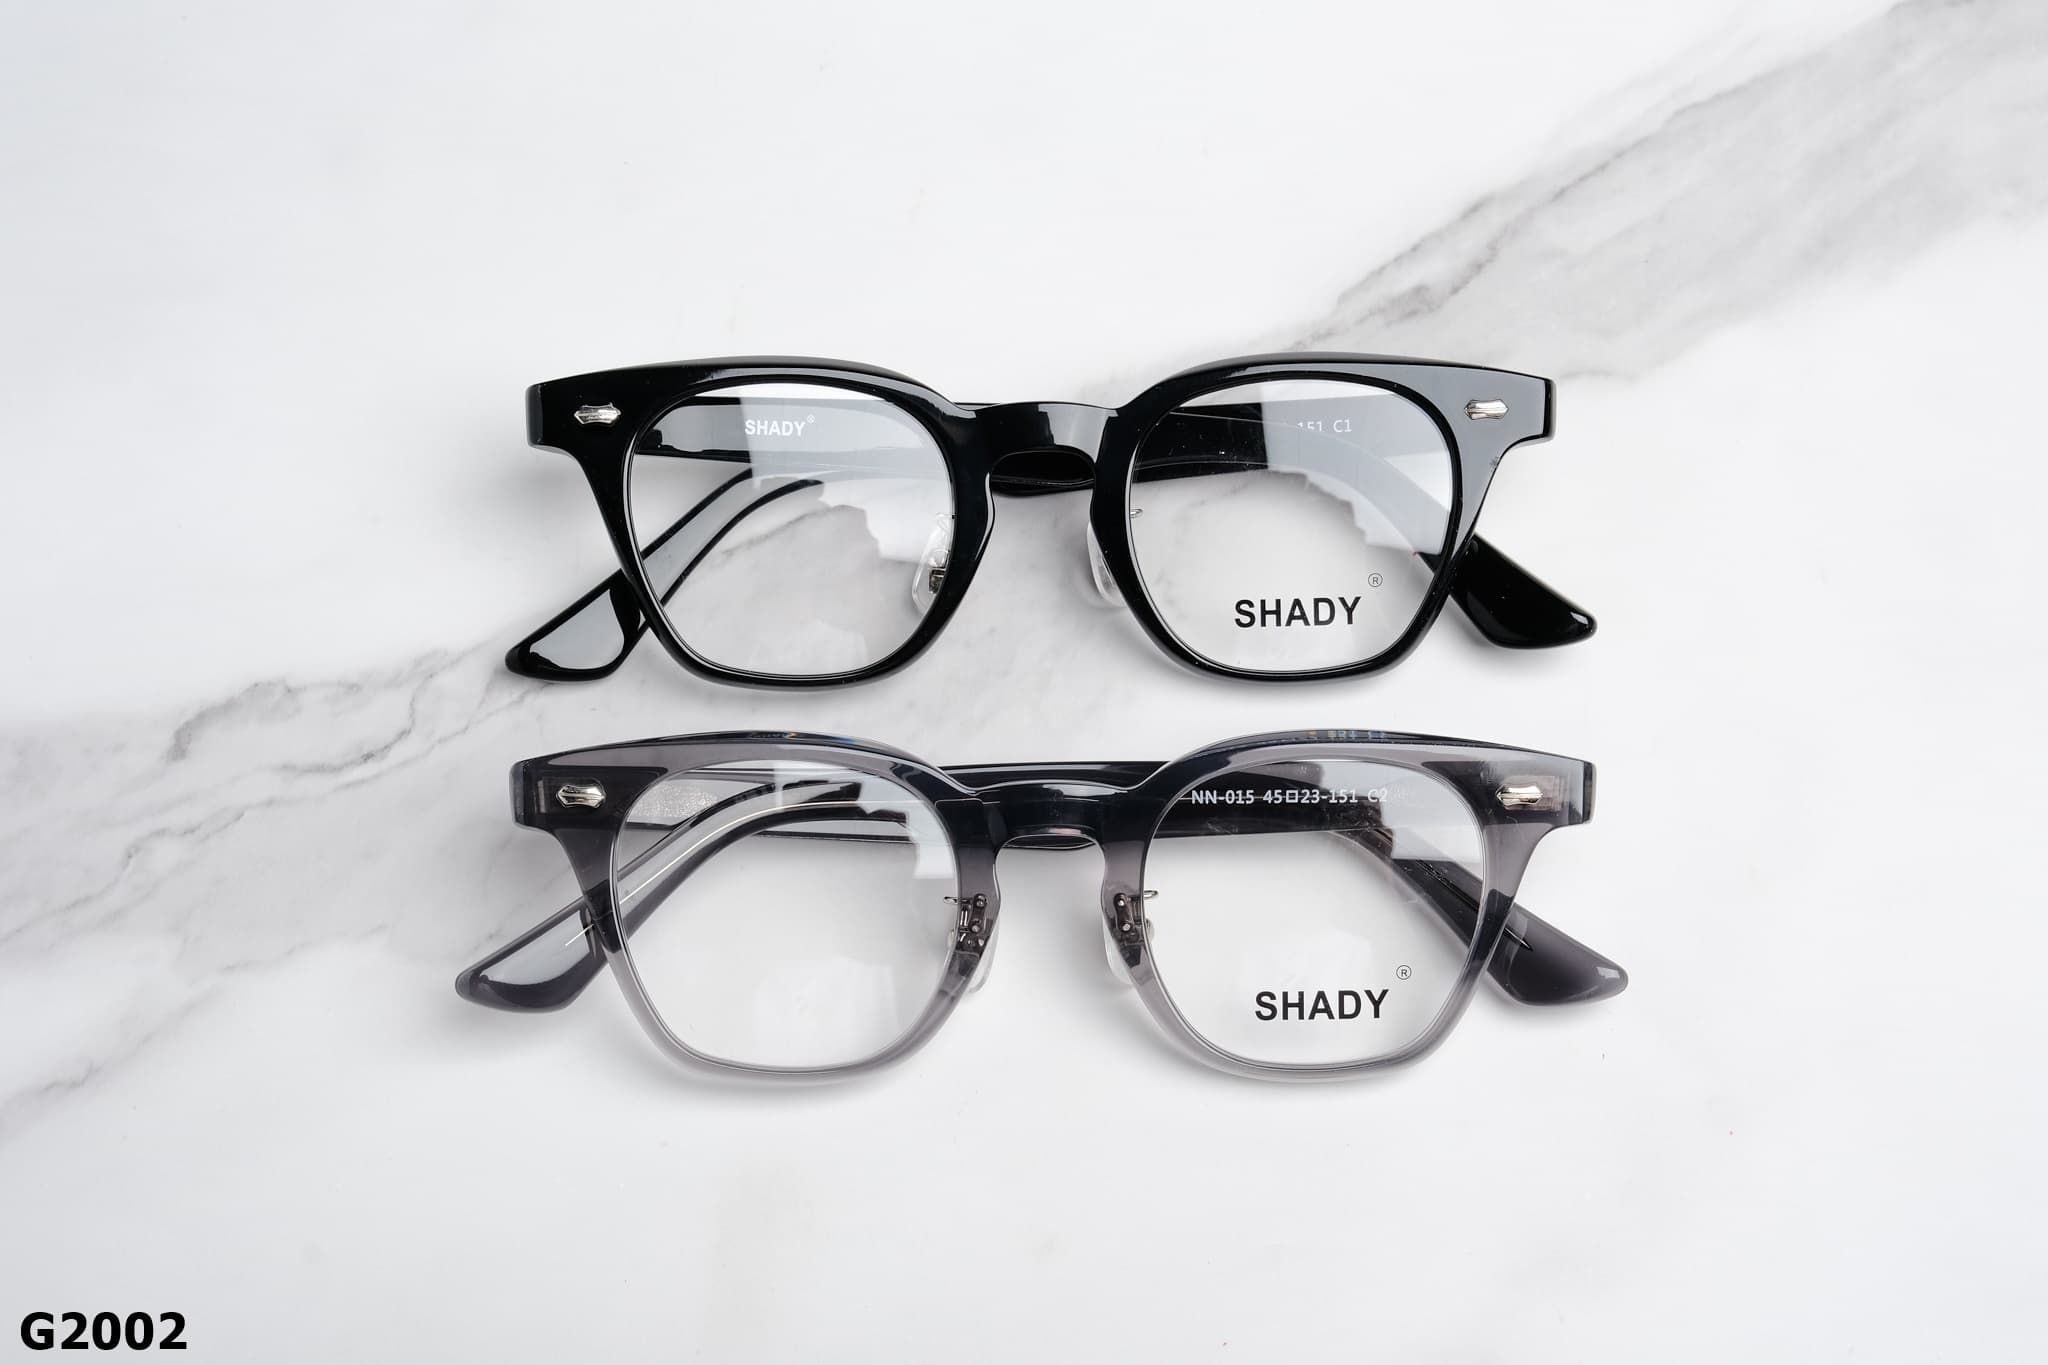  SHADY Eyewear - Glasses - G2002 